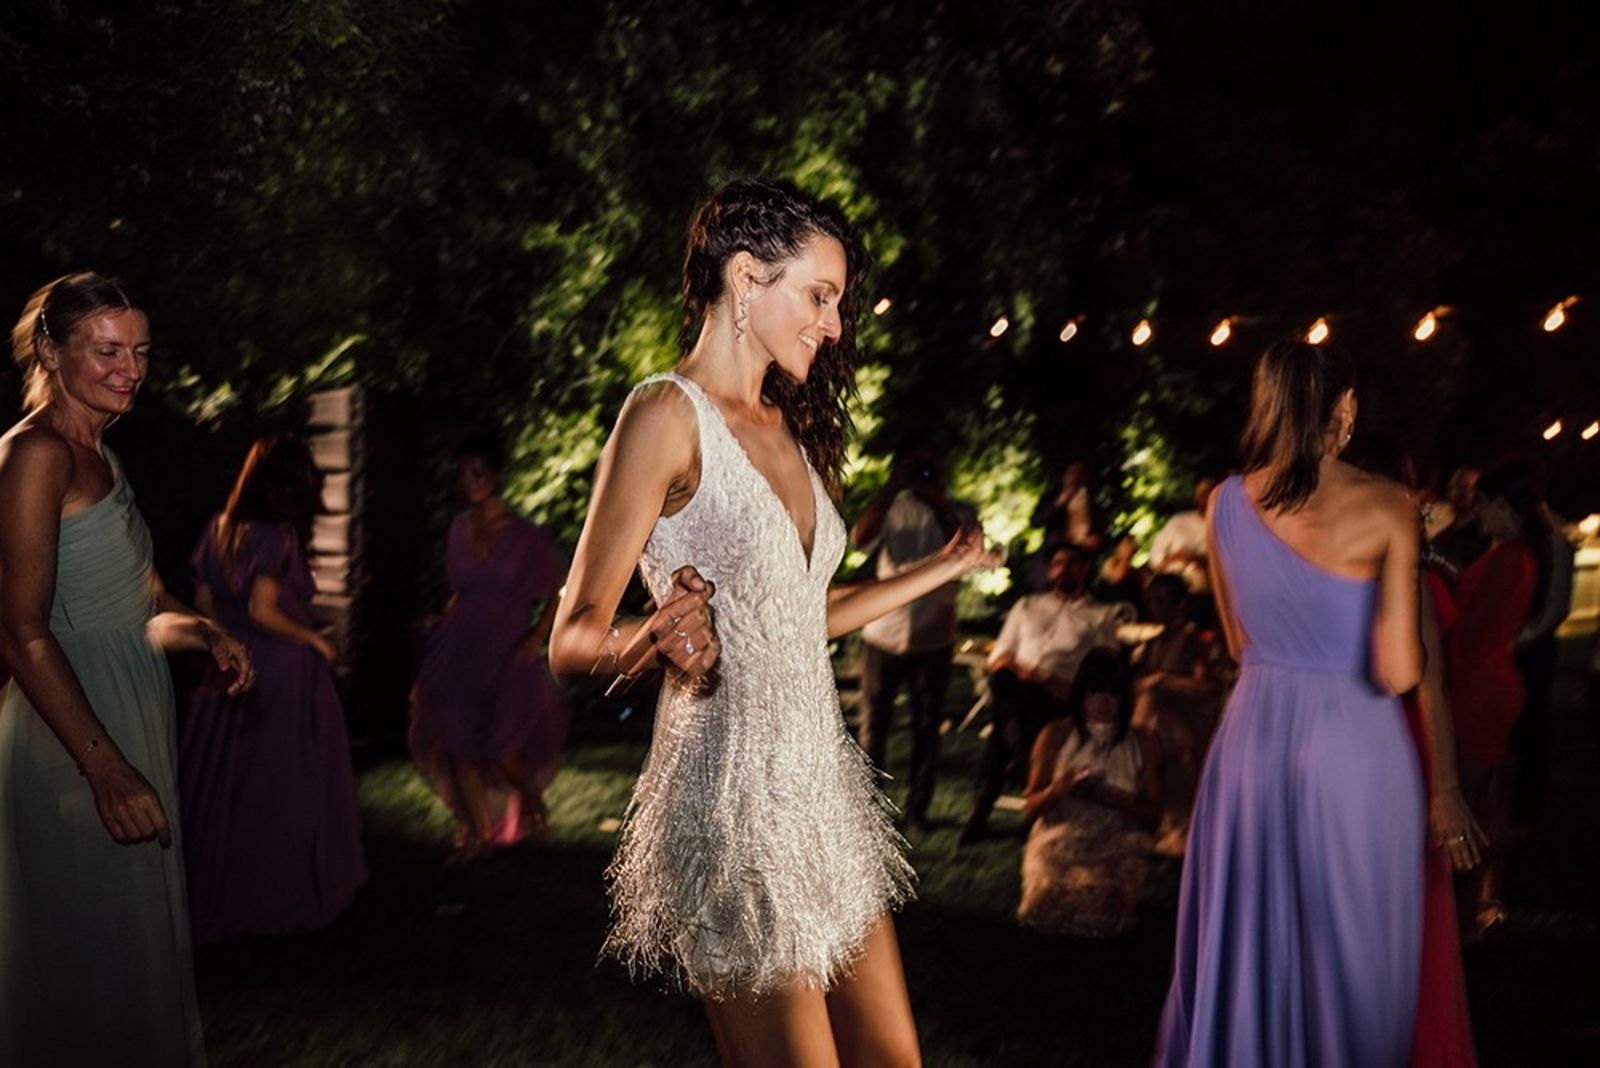 Bride dances in a cocktail dress at an Italian garden wedding reception